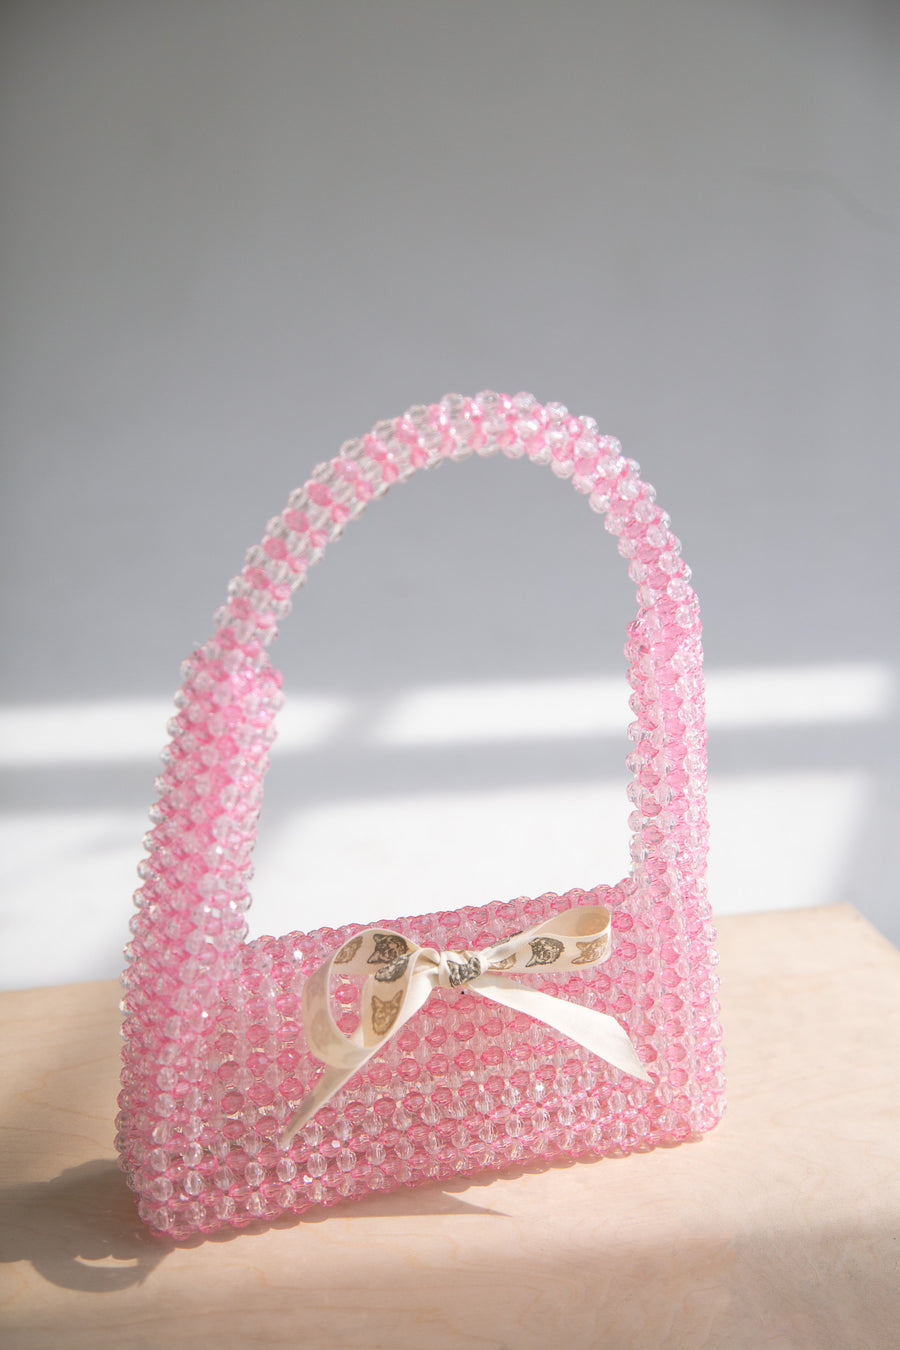 Beaded Baguette Bag in Pink